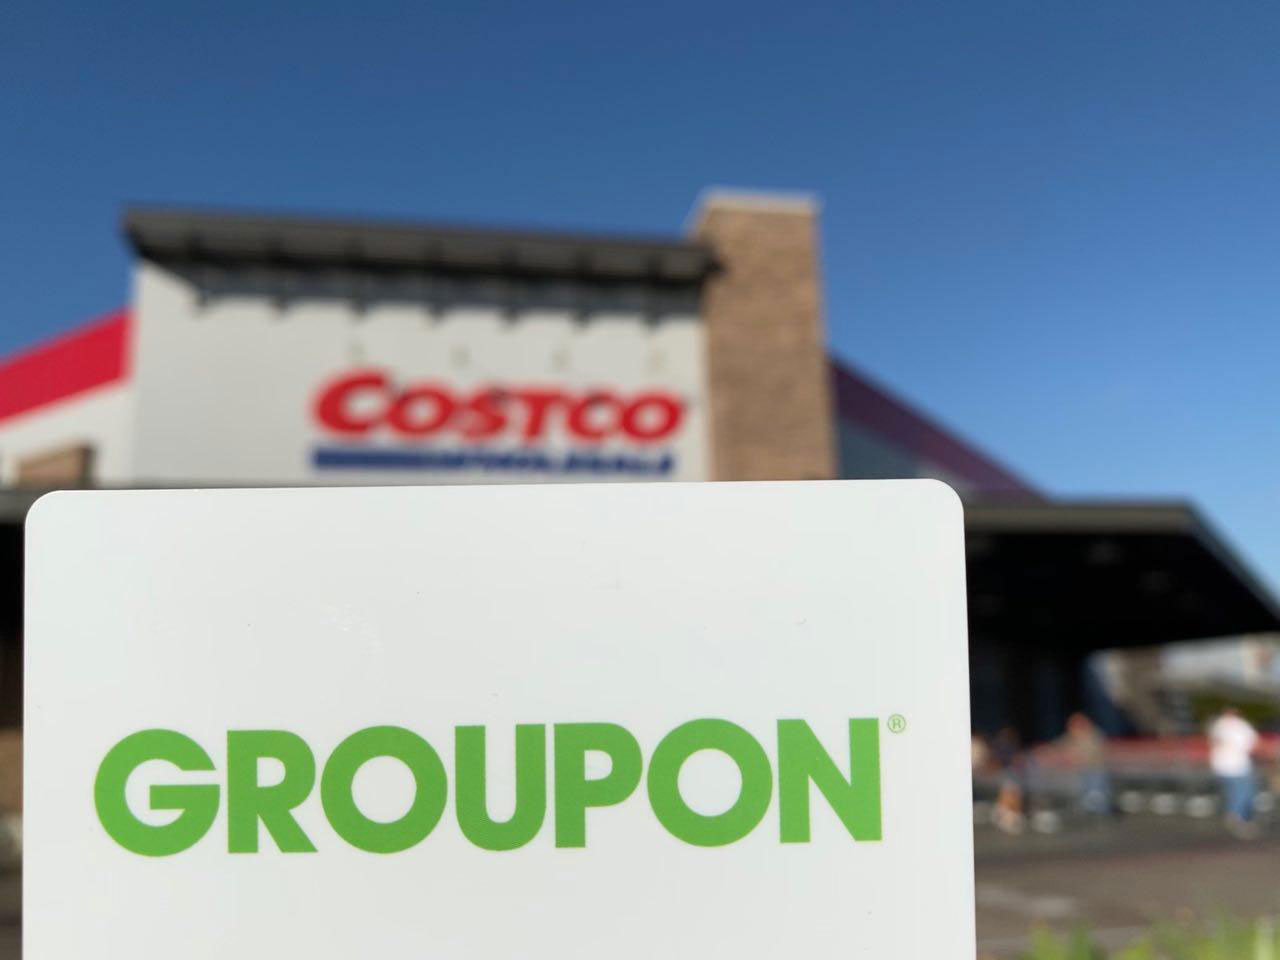 Costco Membership with Groupon